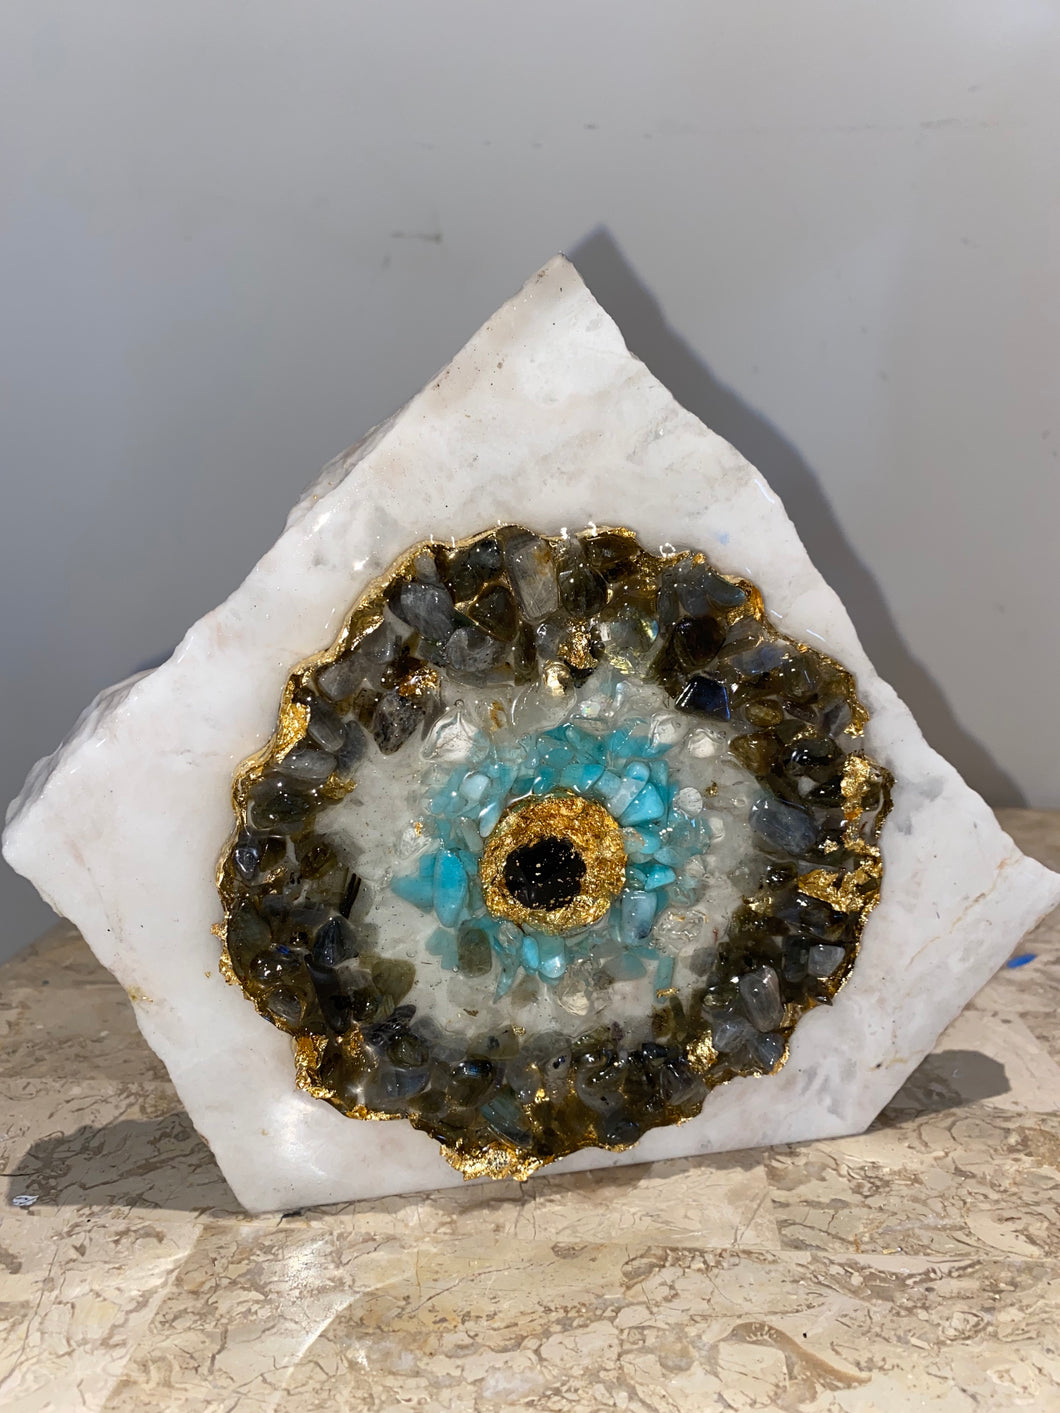 Natural gemstone Mati evil eye on white marble - free standing - used as evil eye